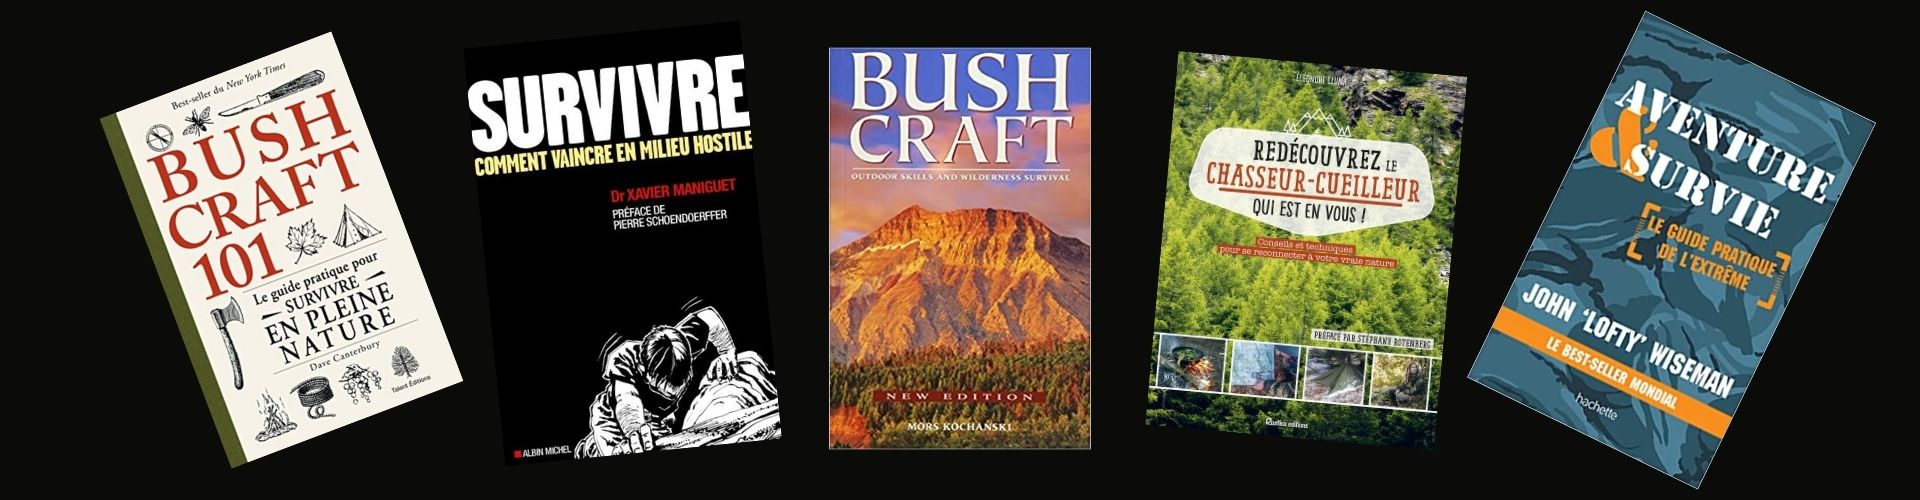 livres bibliothèque survie survivaliste bushcraft nature micro-aventure